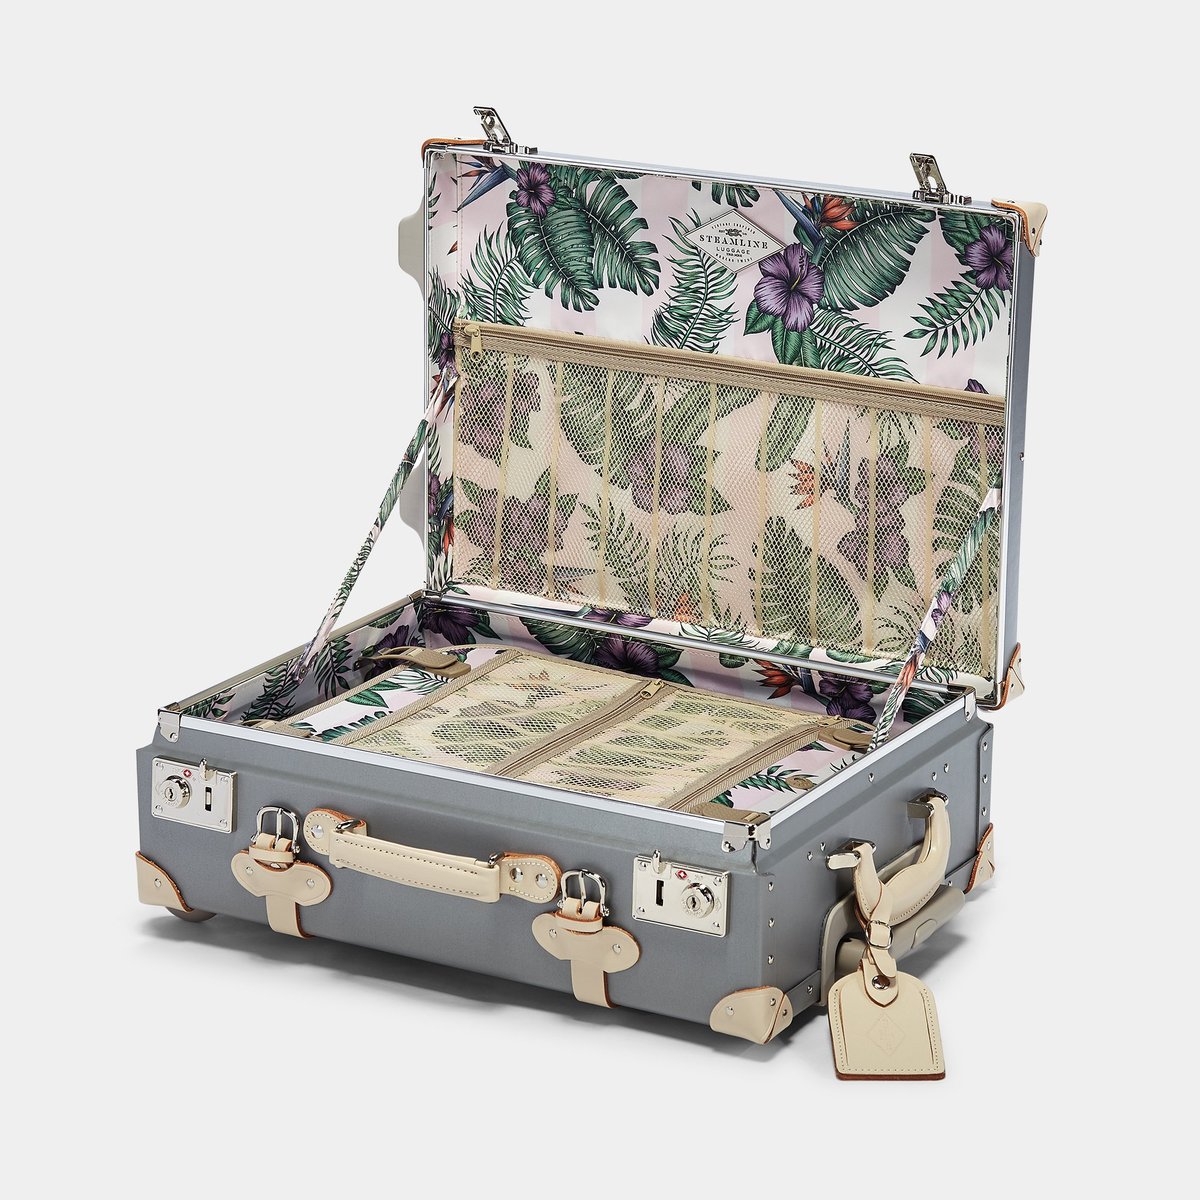   Streamline Luggage $850  